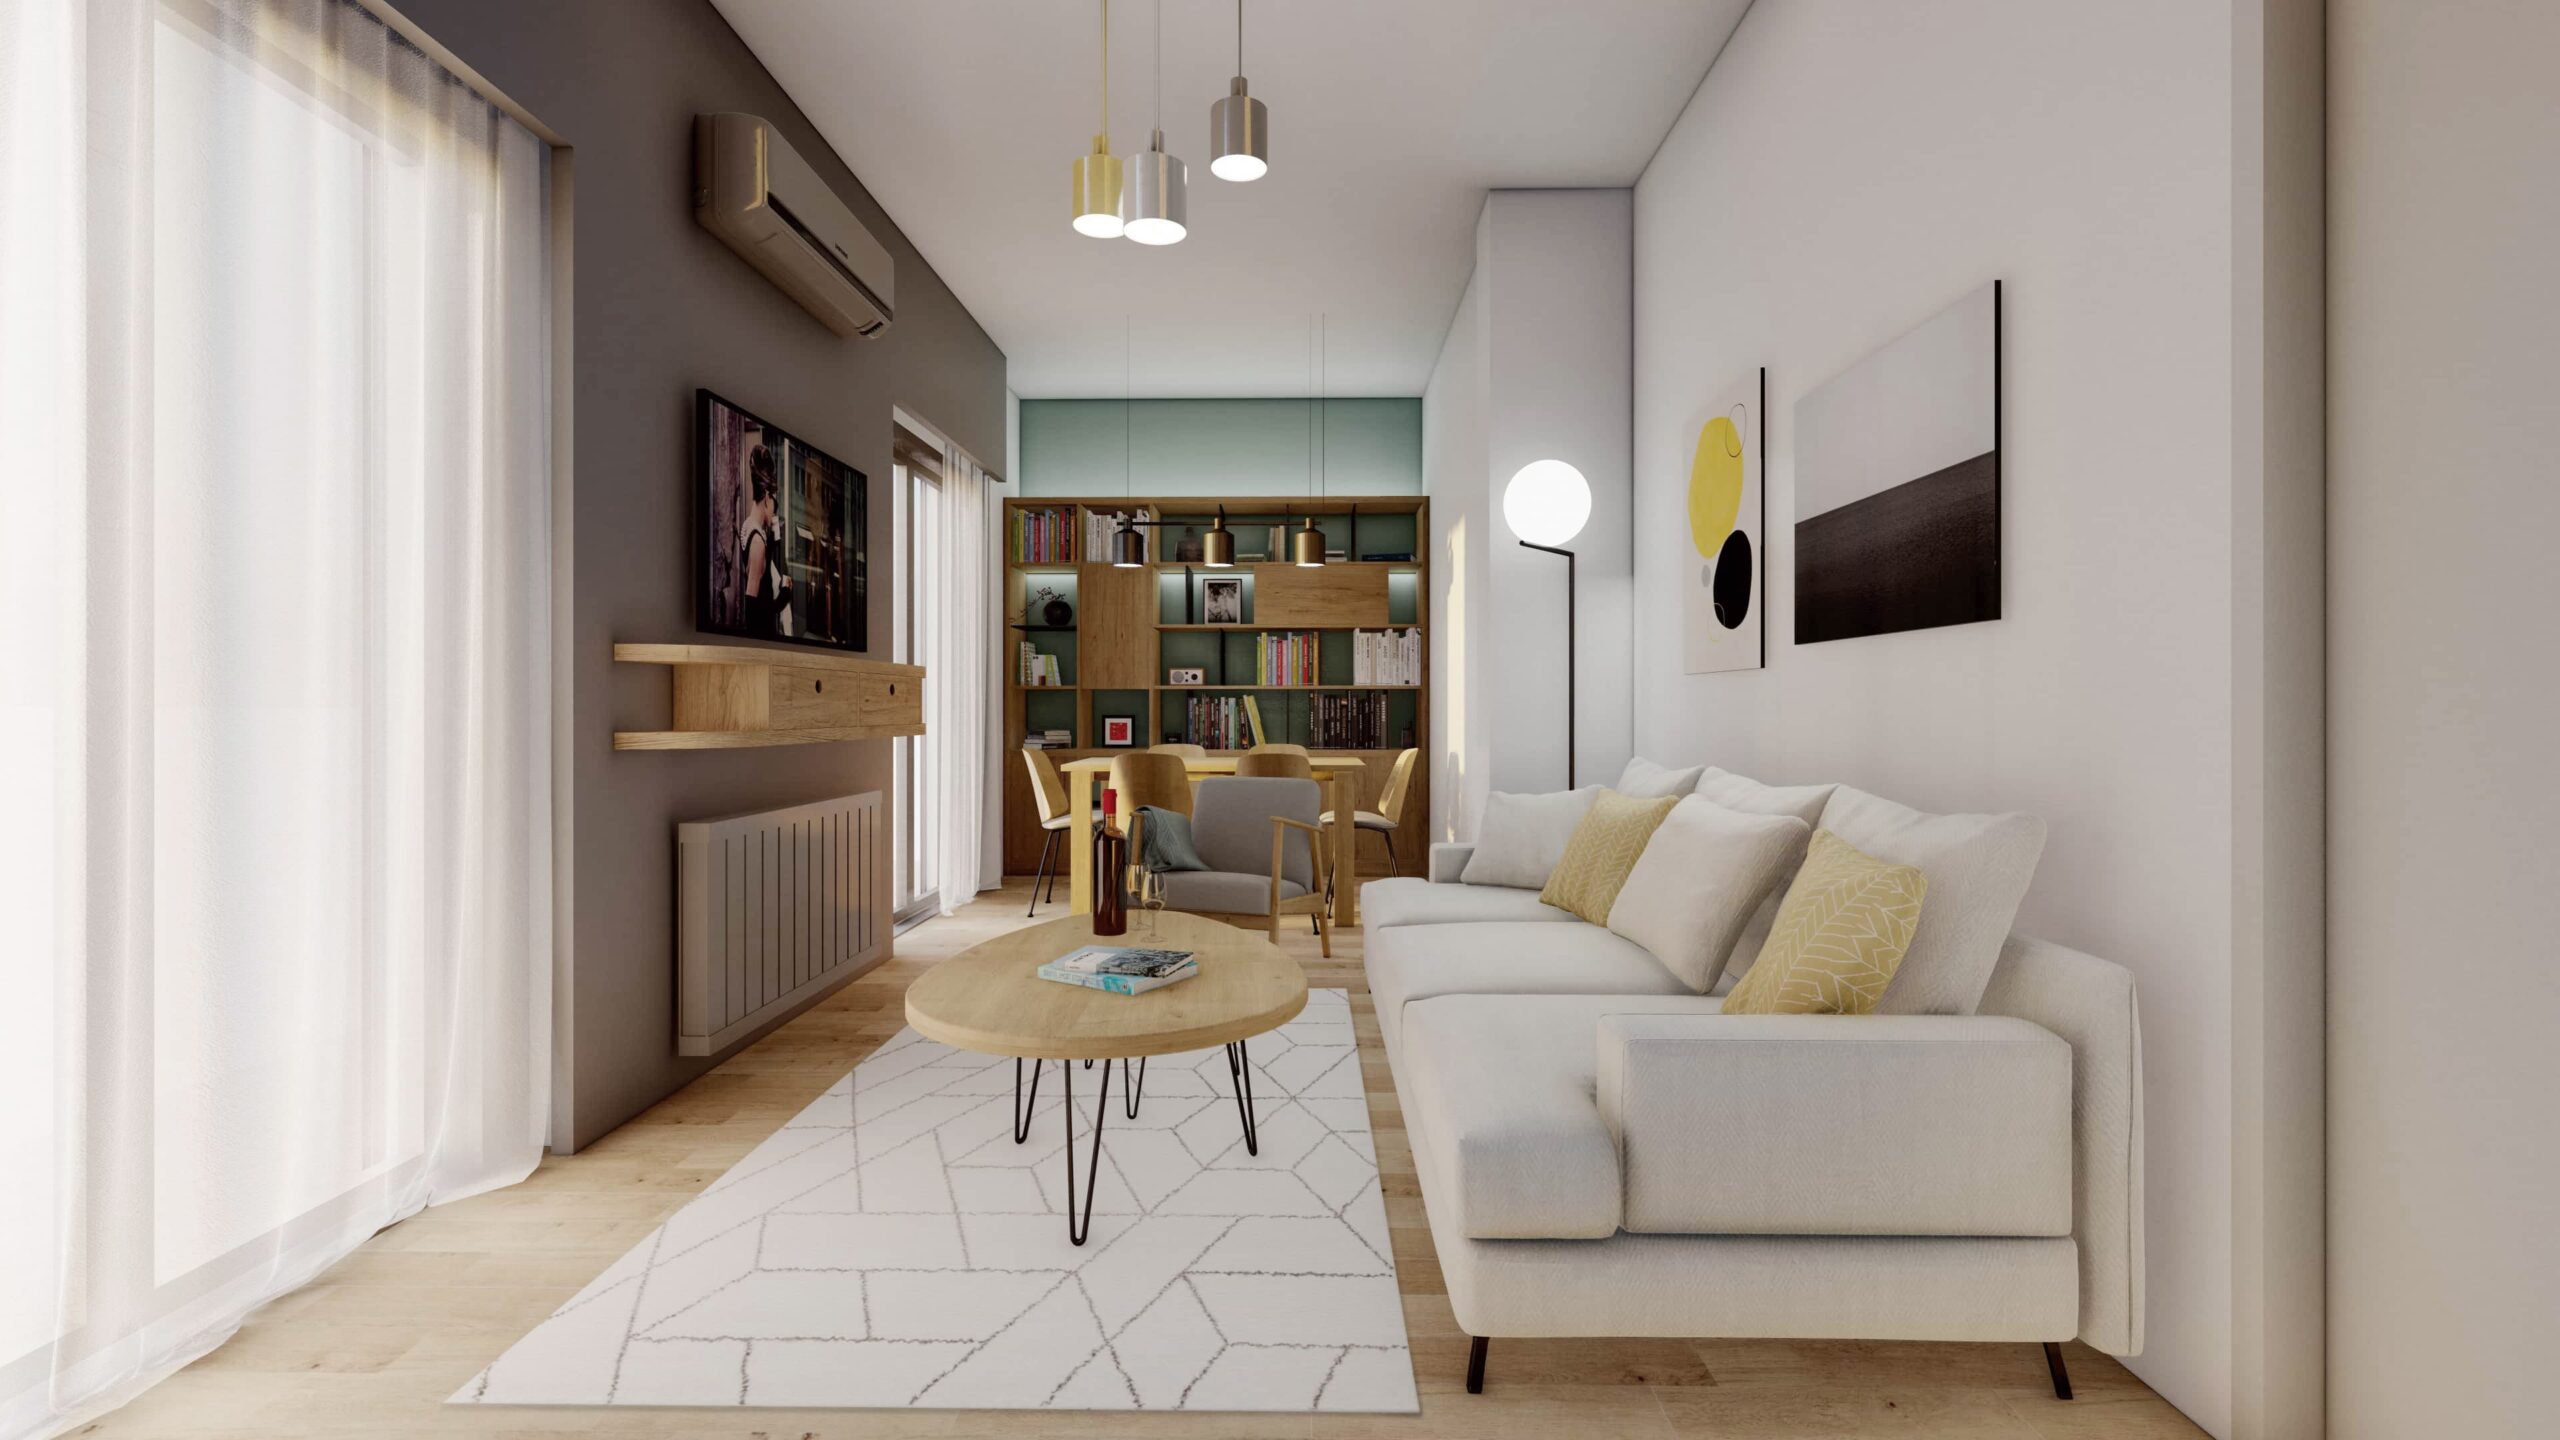 02_PolytroponArchitects_Residence_Renovation_Athens_Kypseli_Interior_LivingRoom_